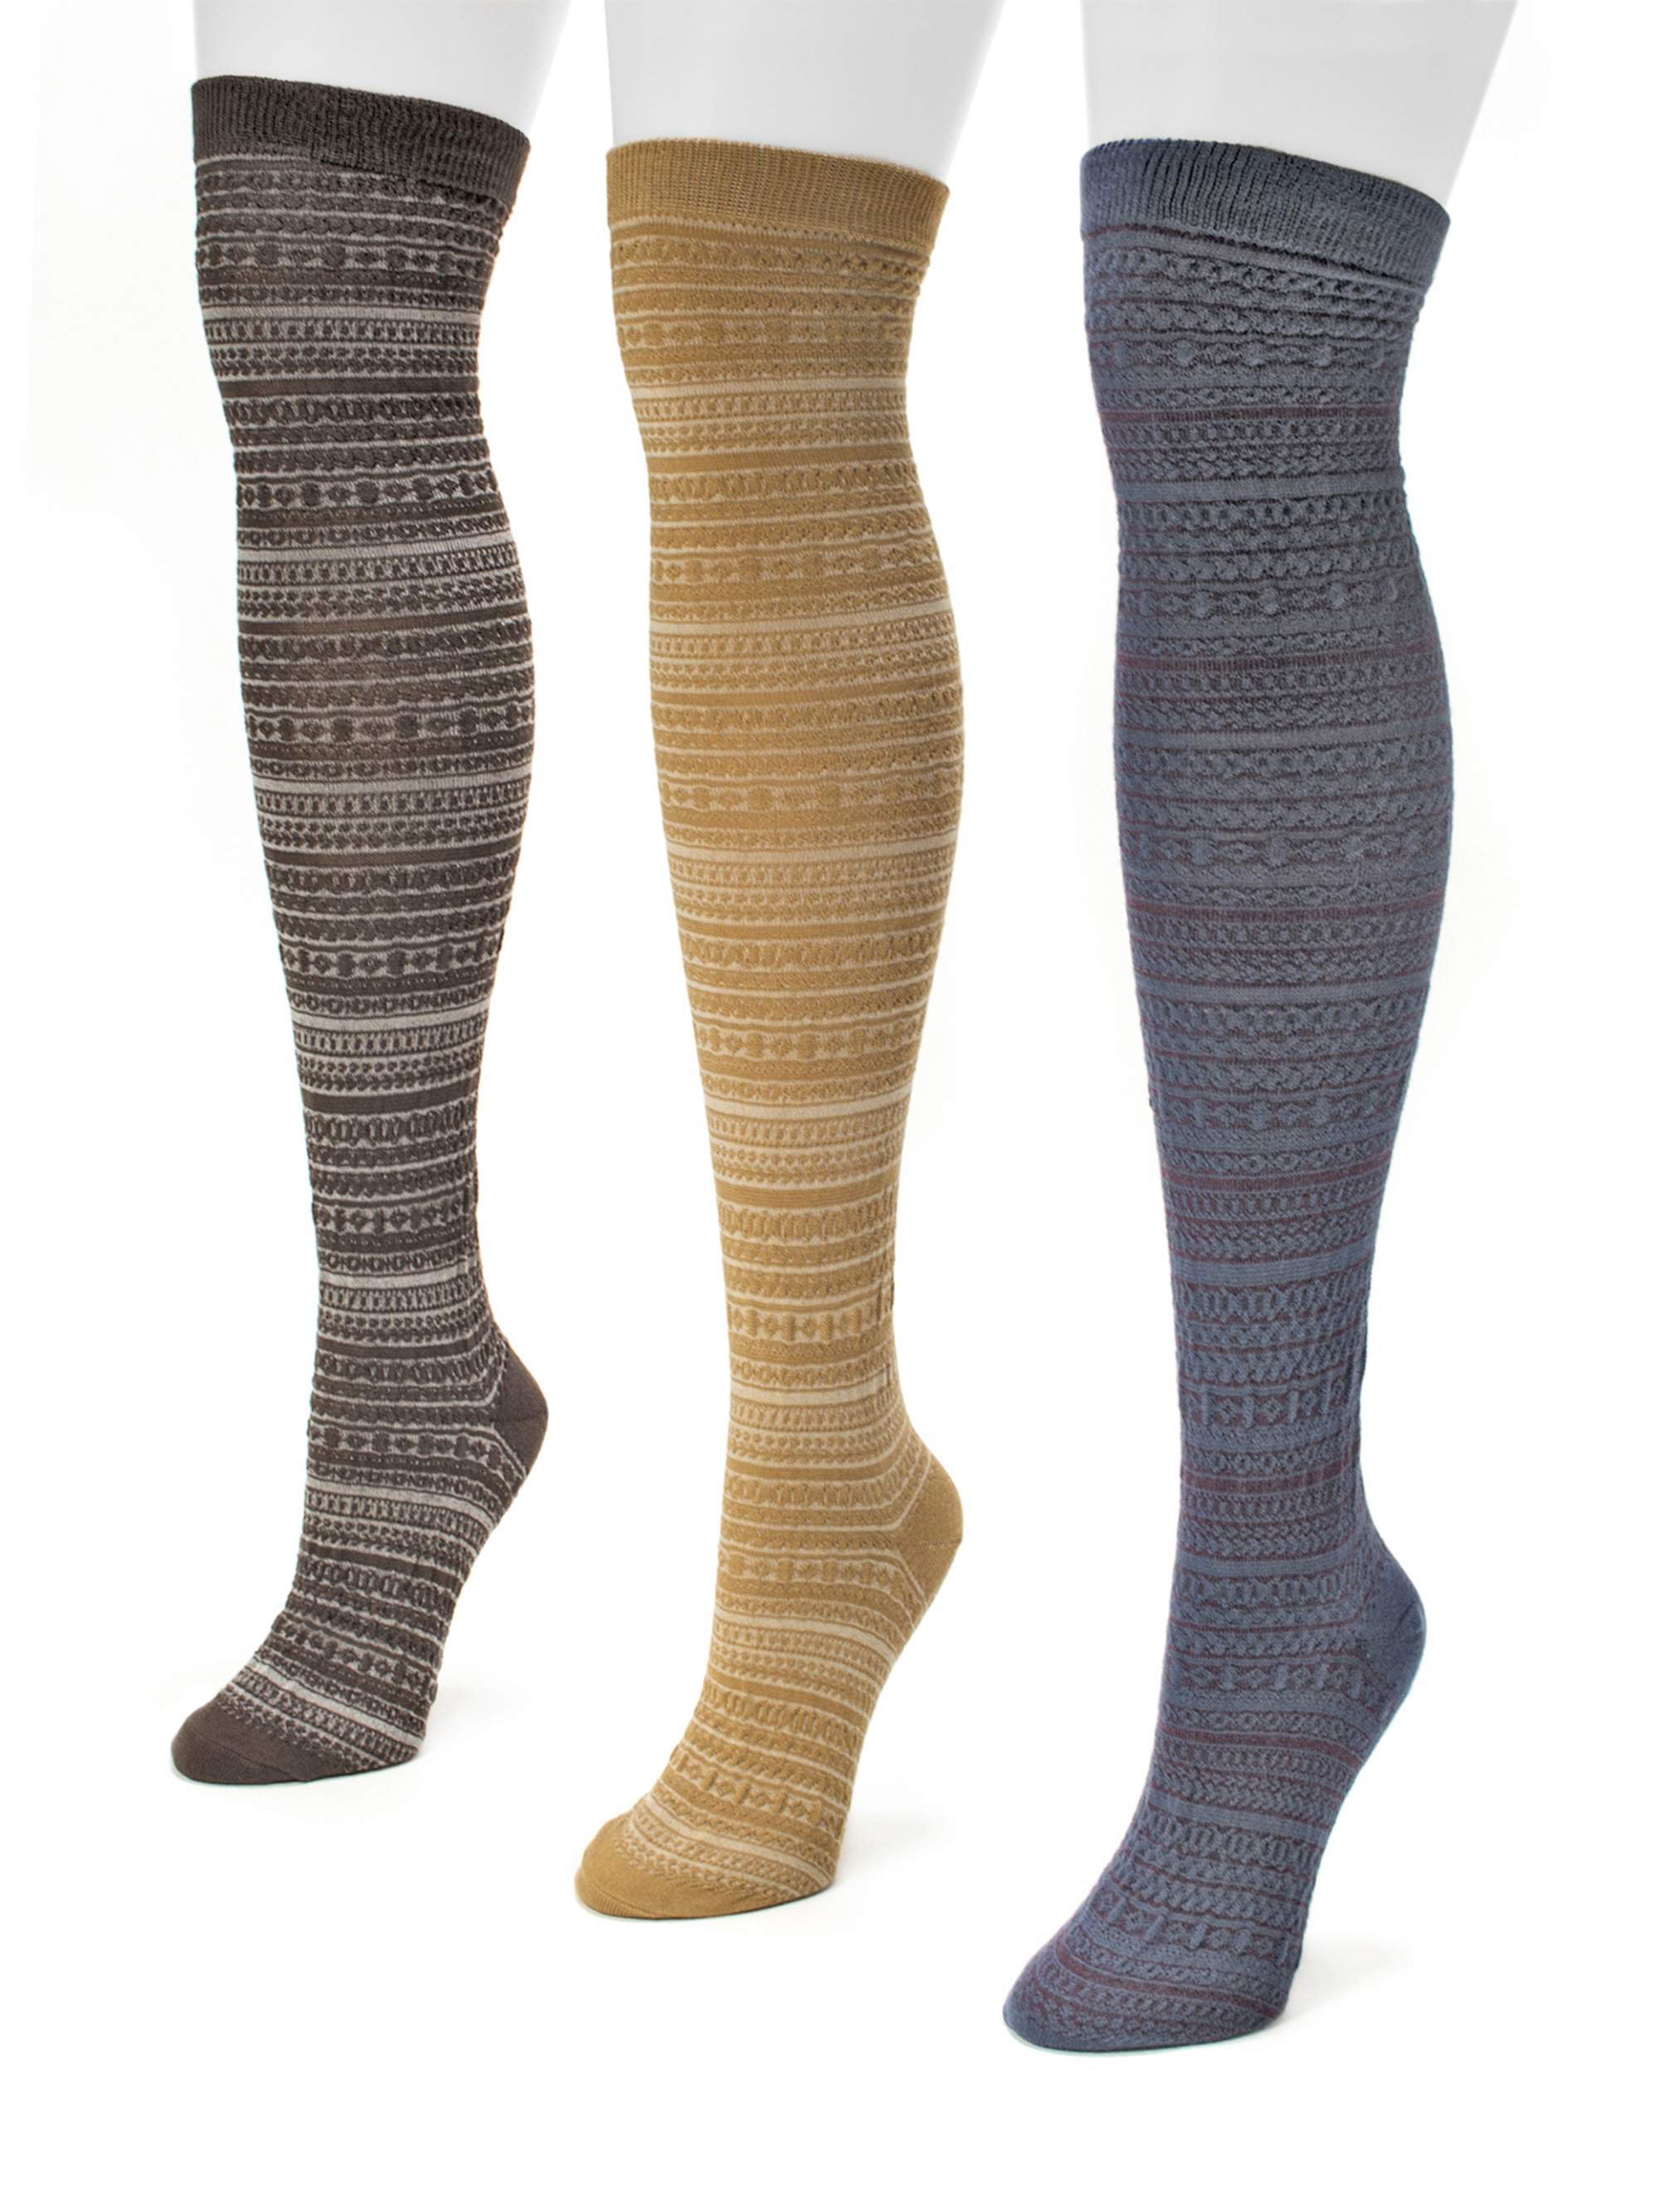 Women's 3 Pair Over the Knee Microfiber Socks - Walmart.com